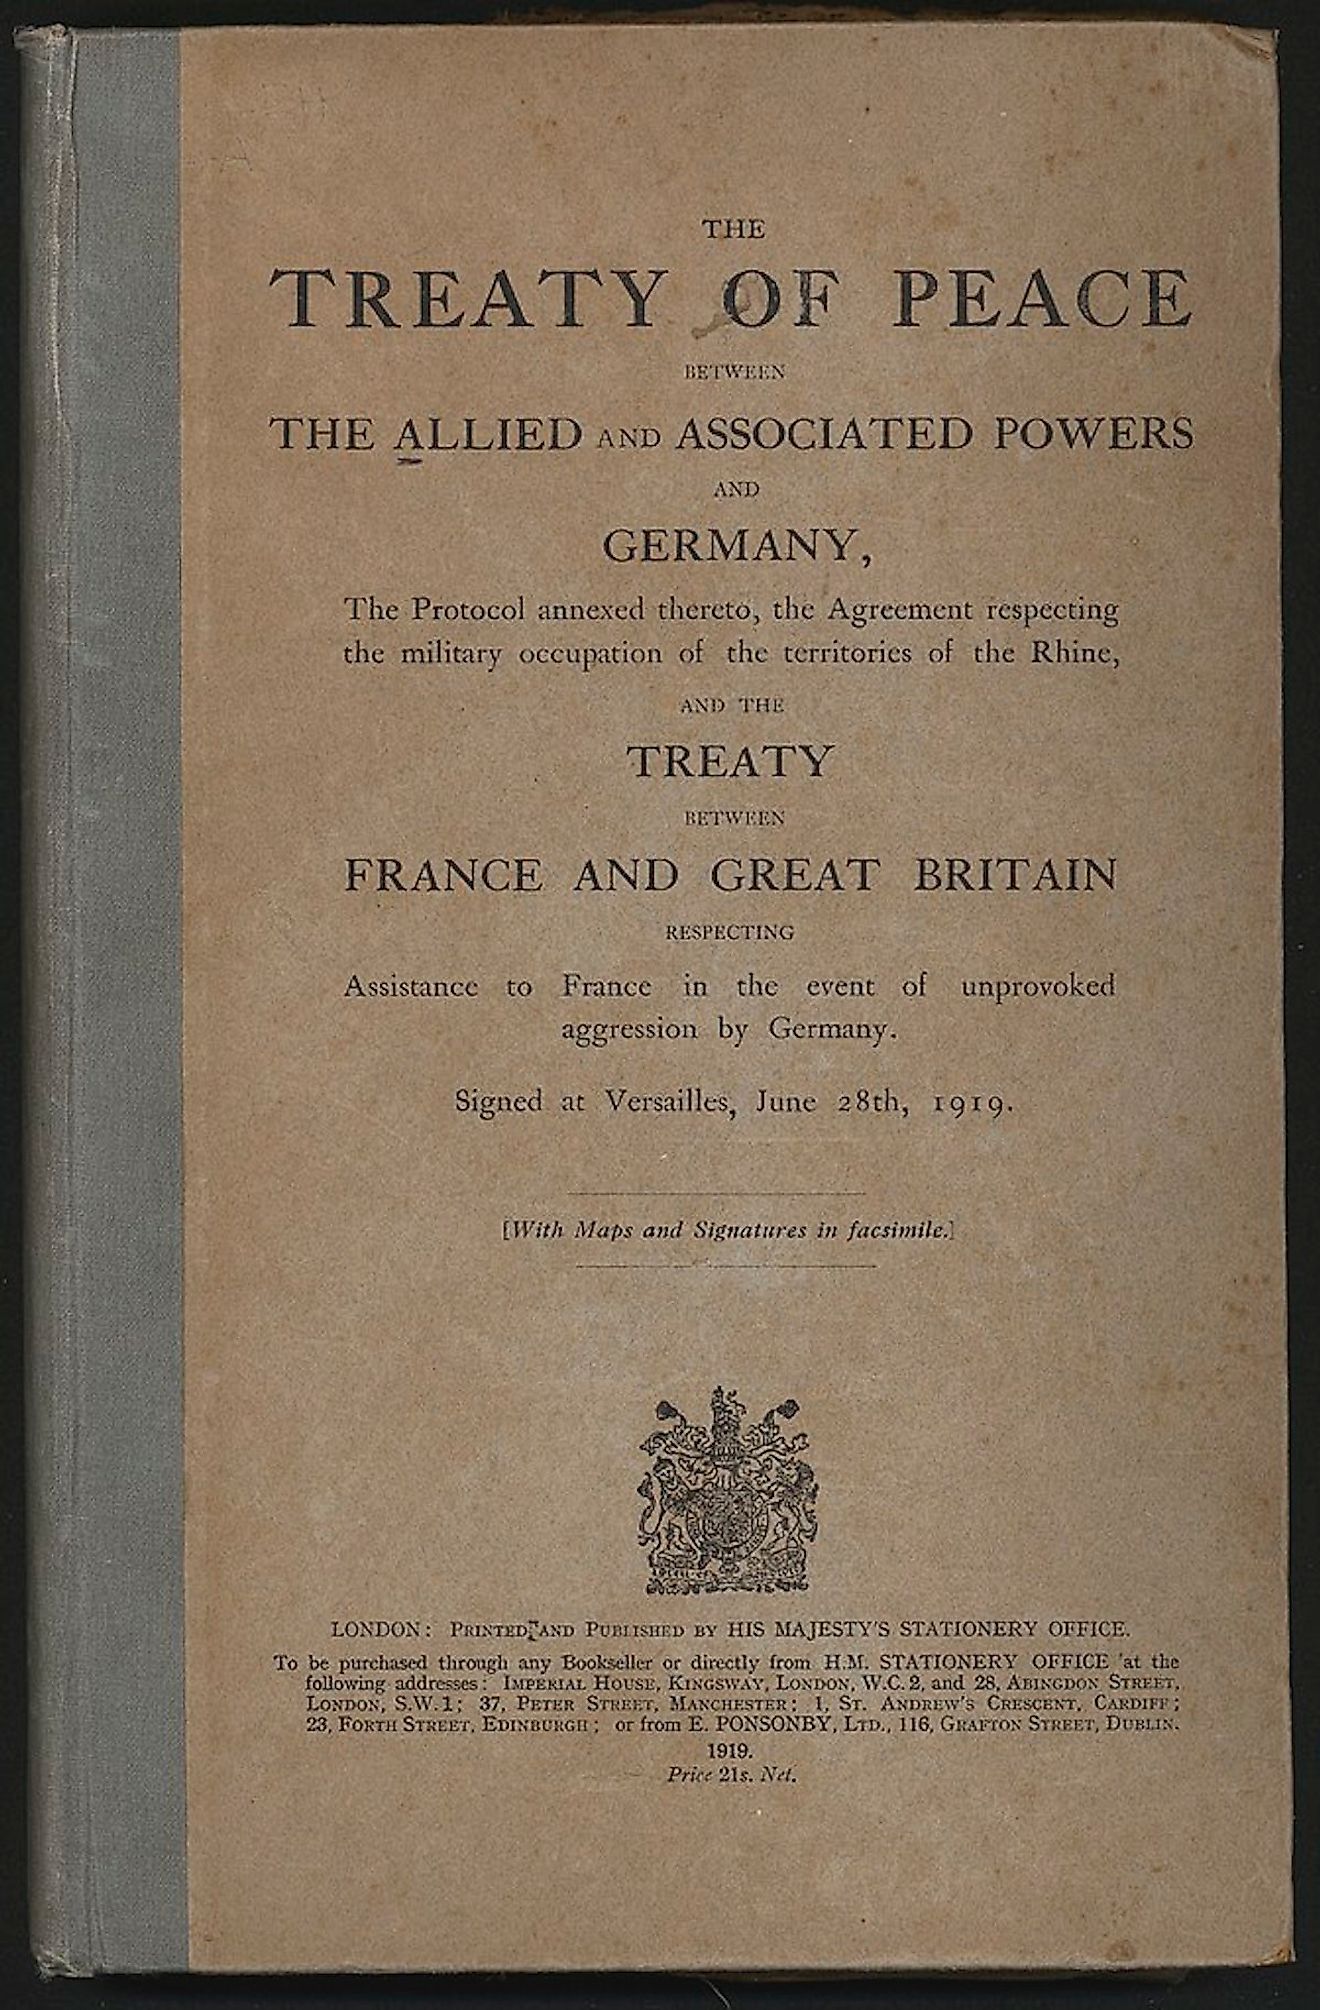 Treaty of Versailles, English version. Image credit: Auckland War Memorial Museum/Public domain